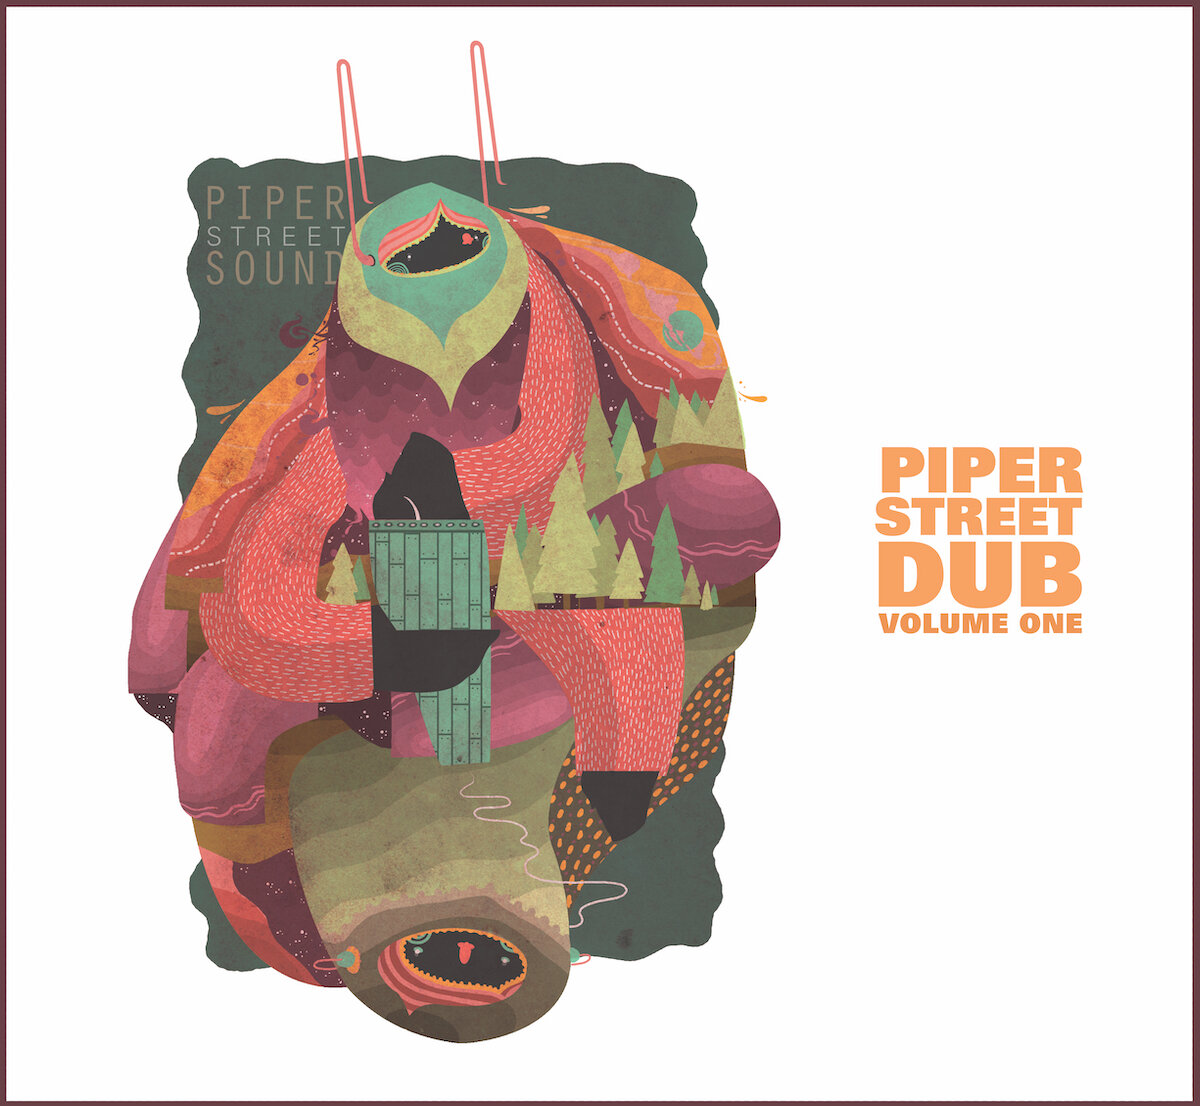 Piper Street Sound - Piper Street Dub Vol.1 Cover Art.jpg